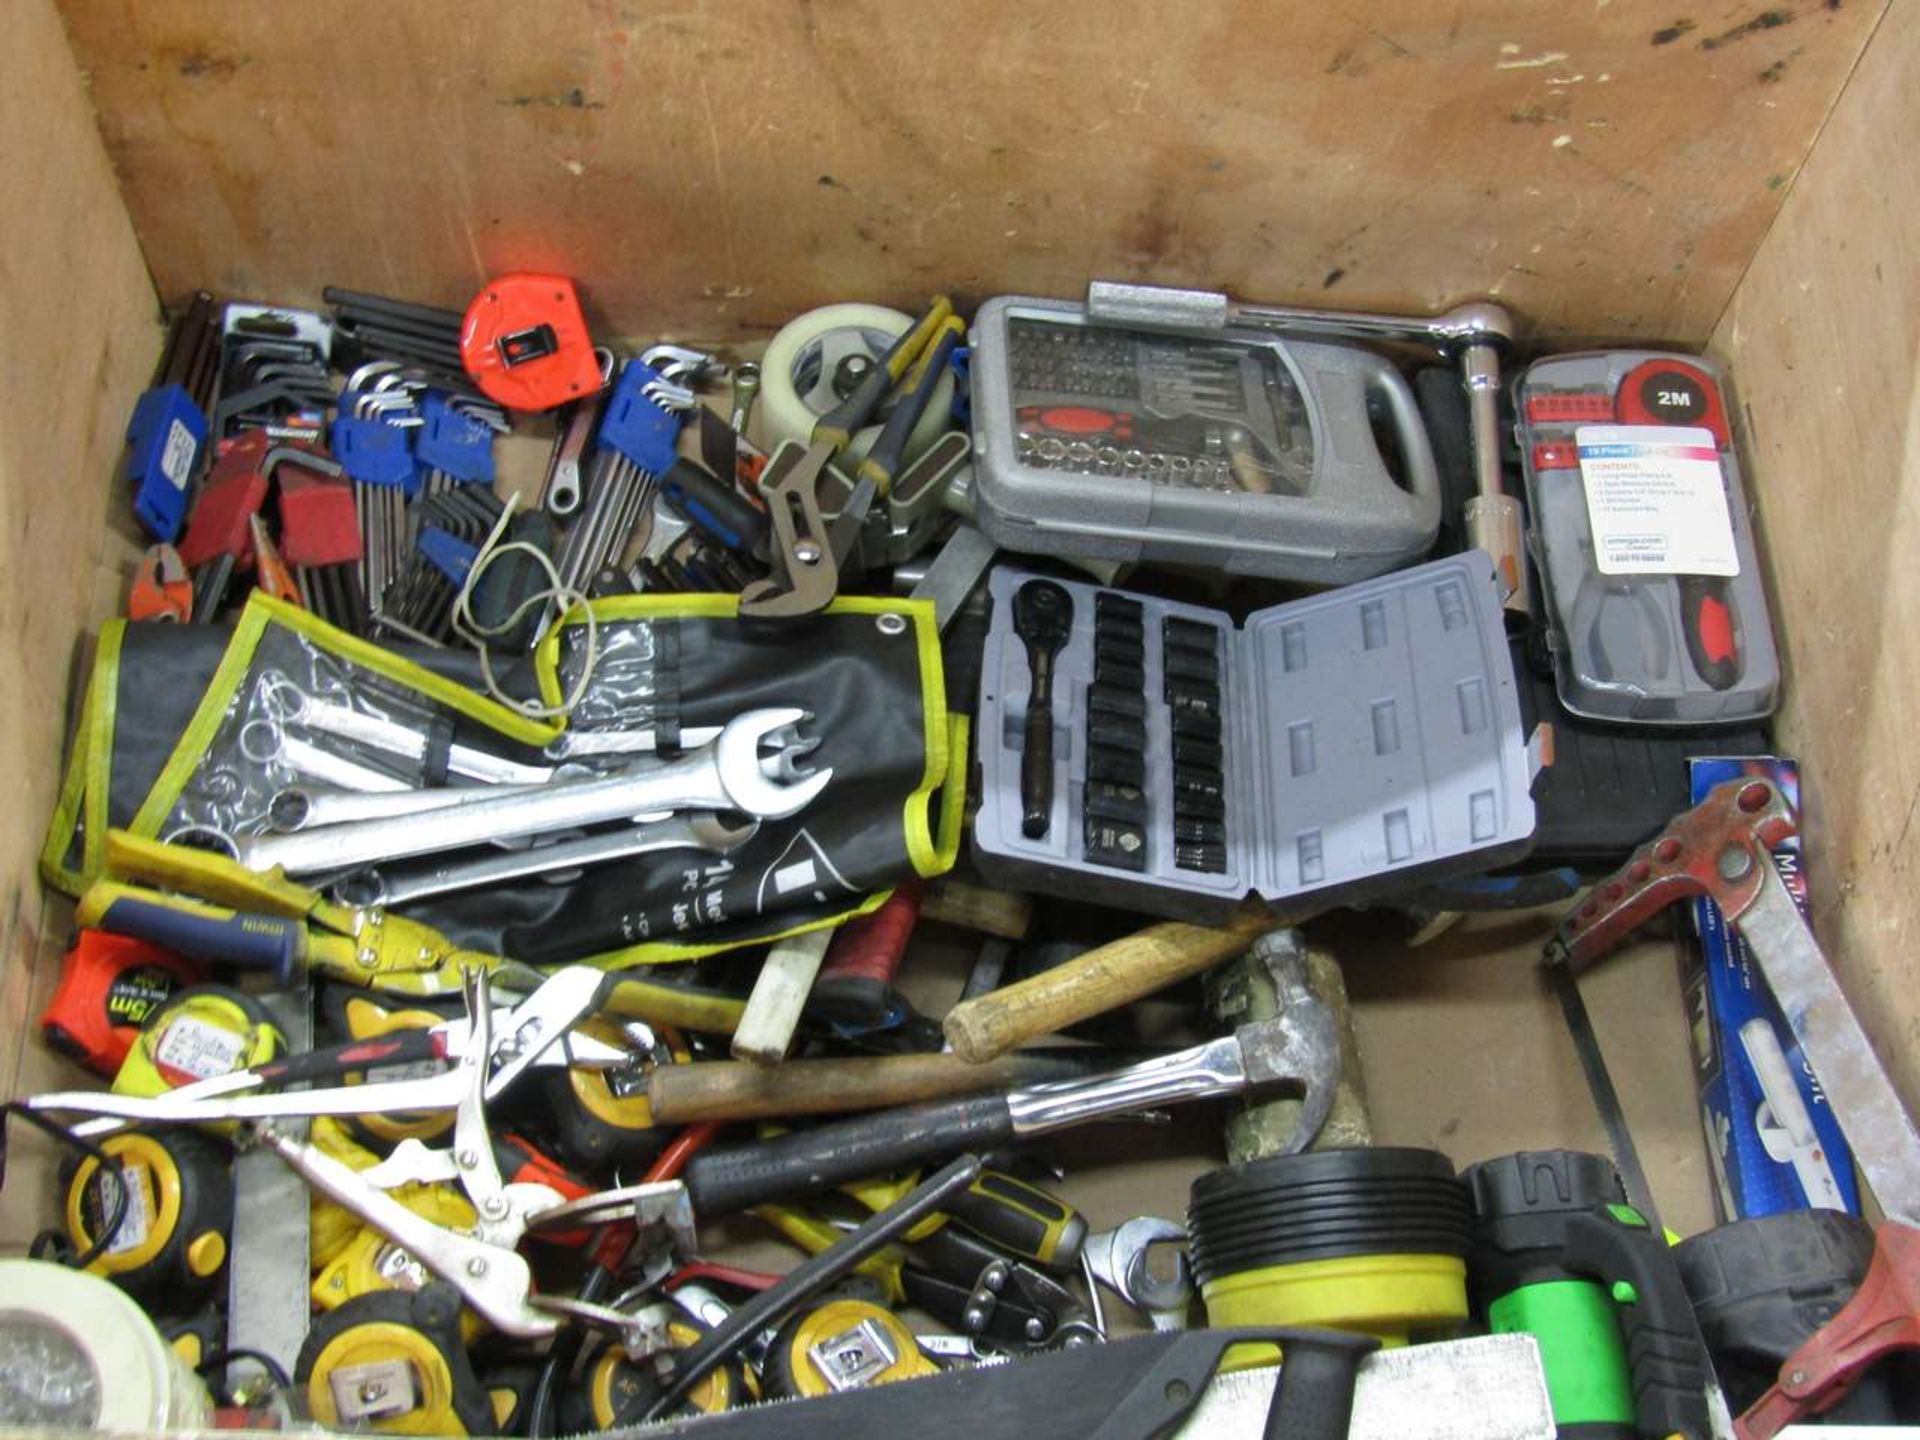 Skid Box full of assorted tools